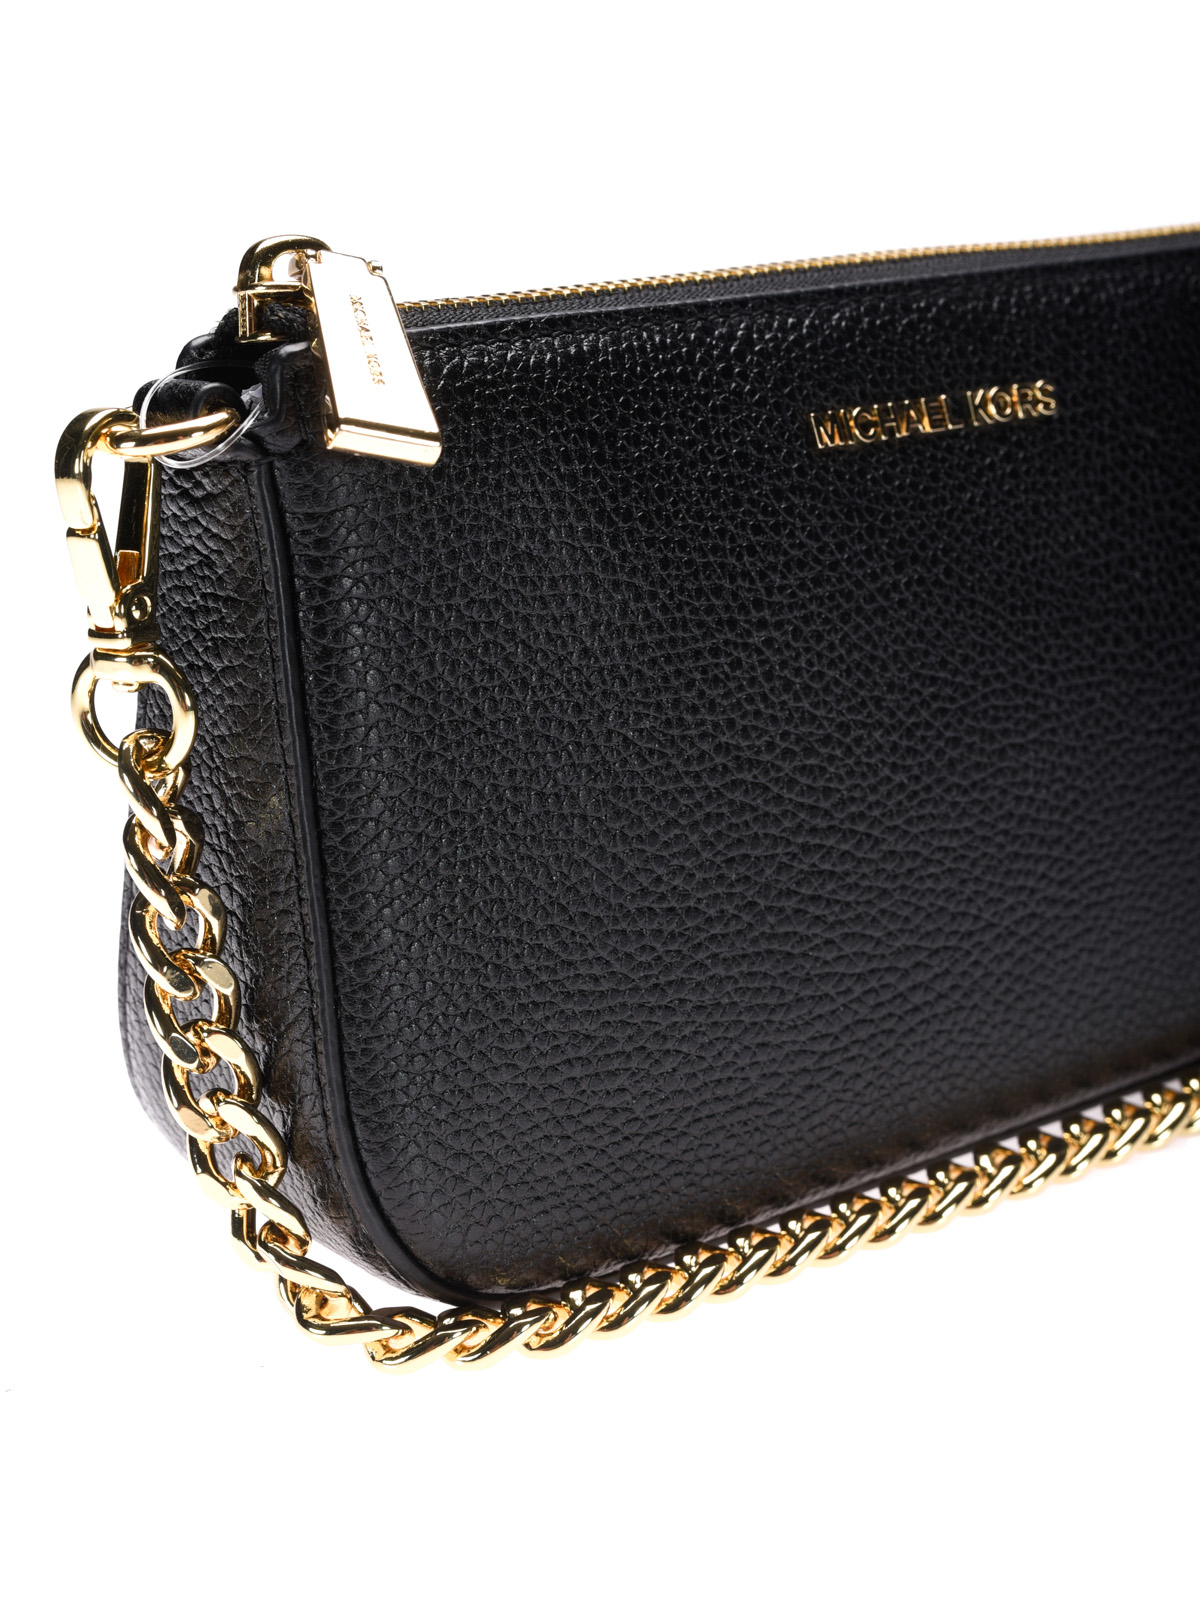 Wallets & purses Michael Kors - Jet Set black wristlet purse - 32F7GFDW6L001